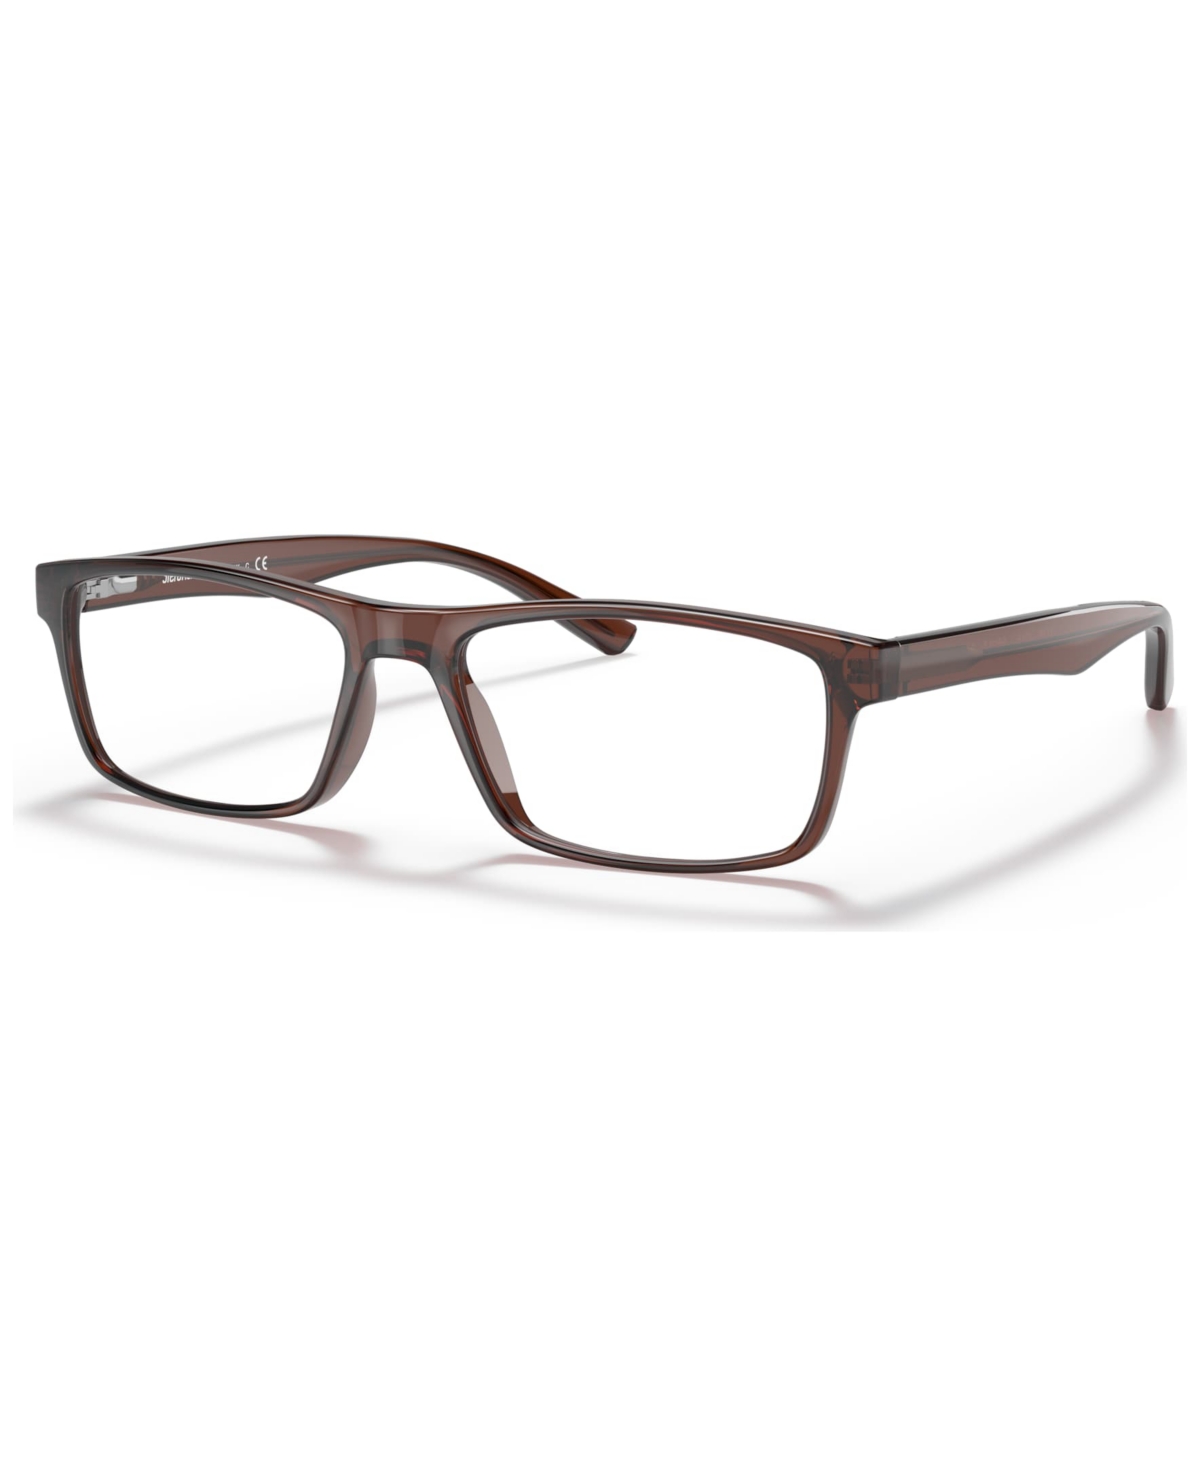 Steroflex Men's Eyeglasses, SF1149 - Brown